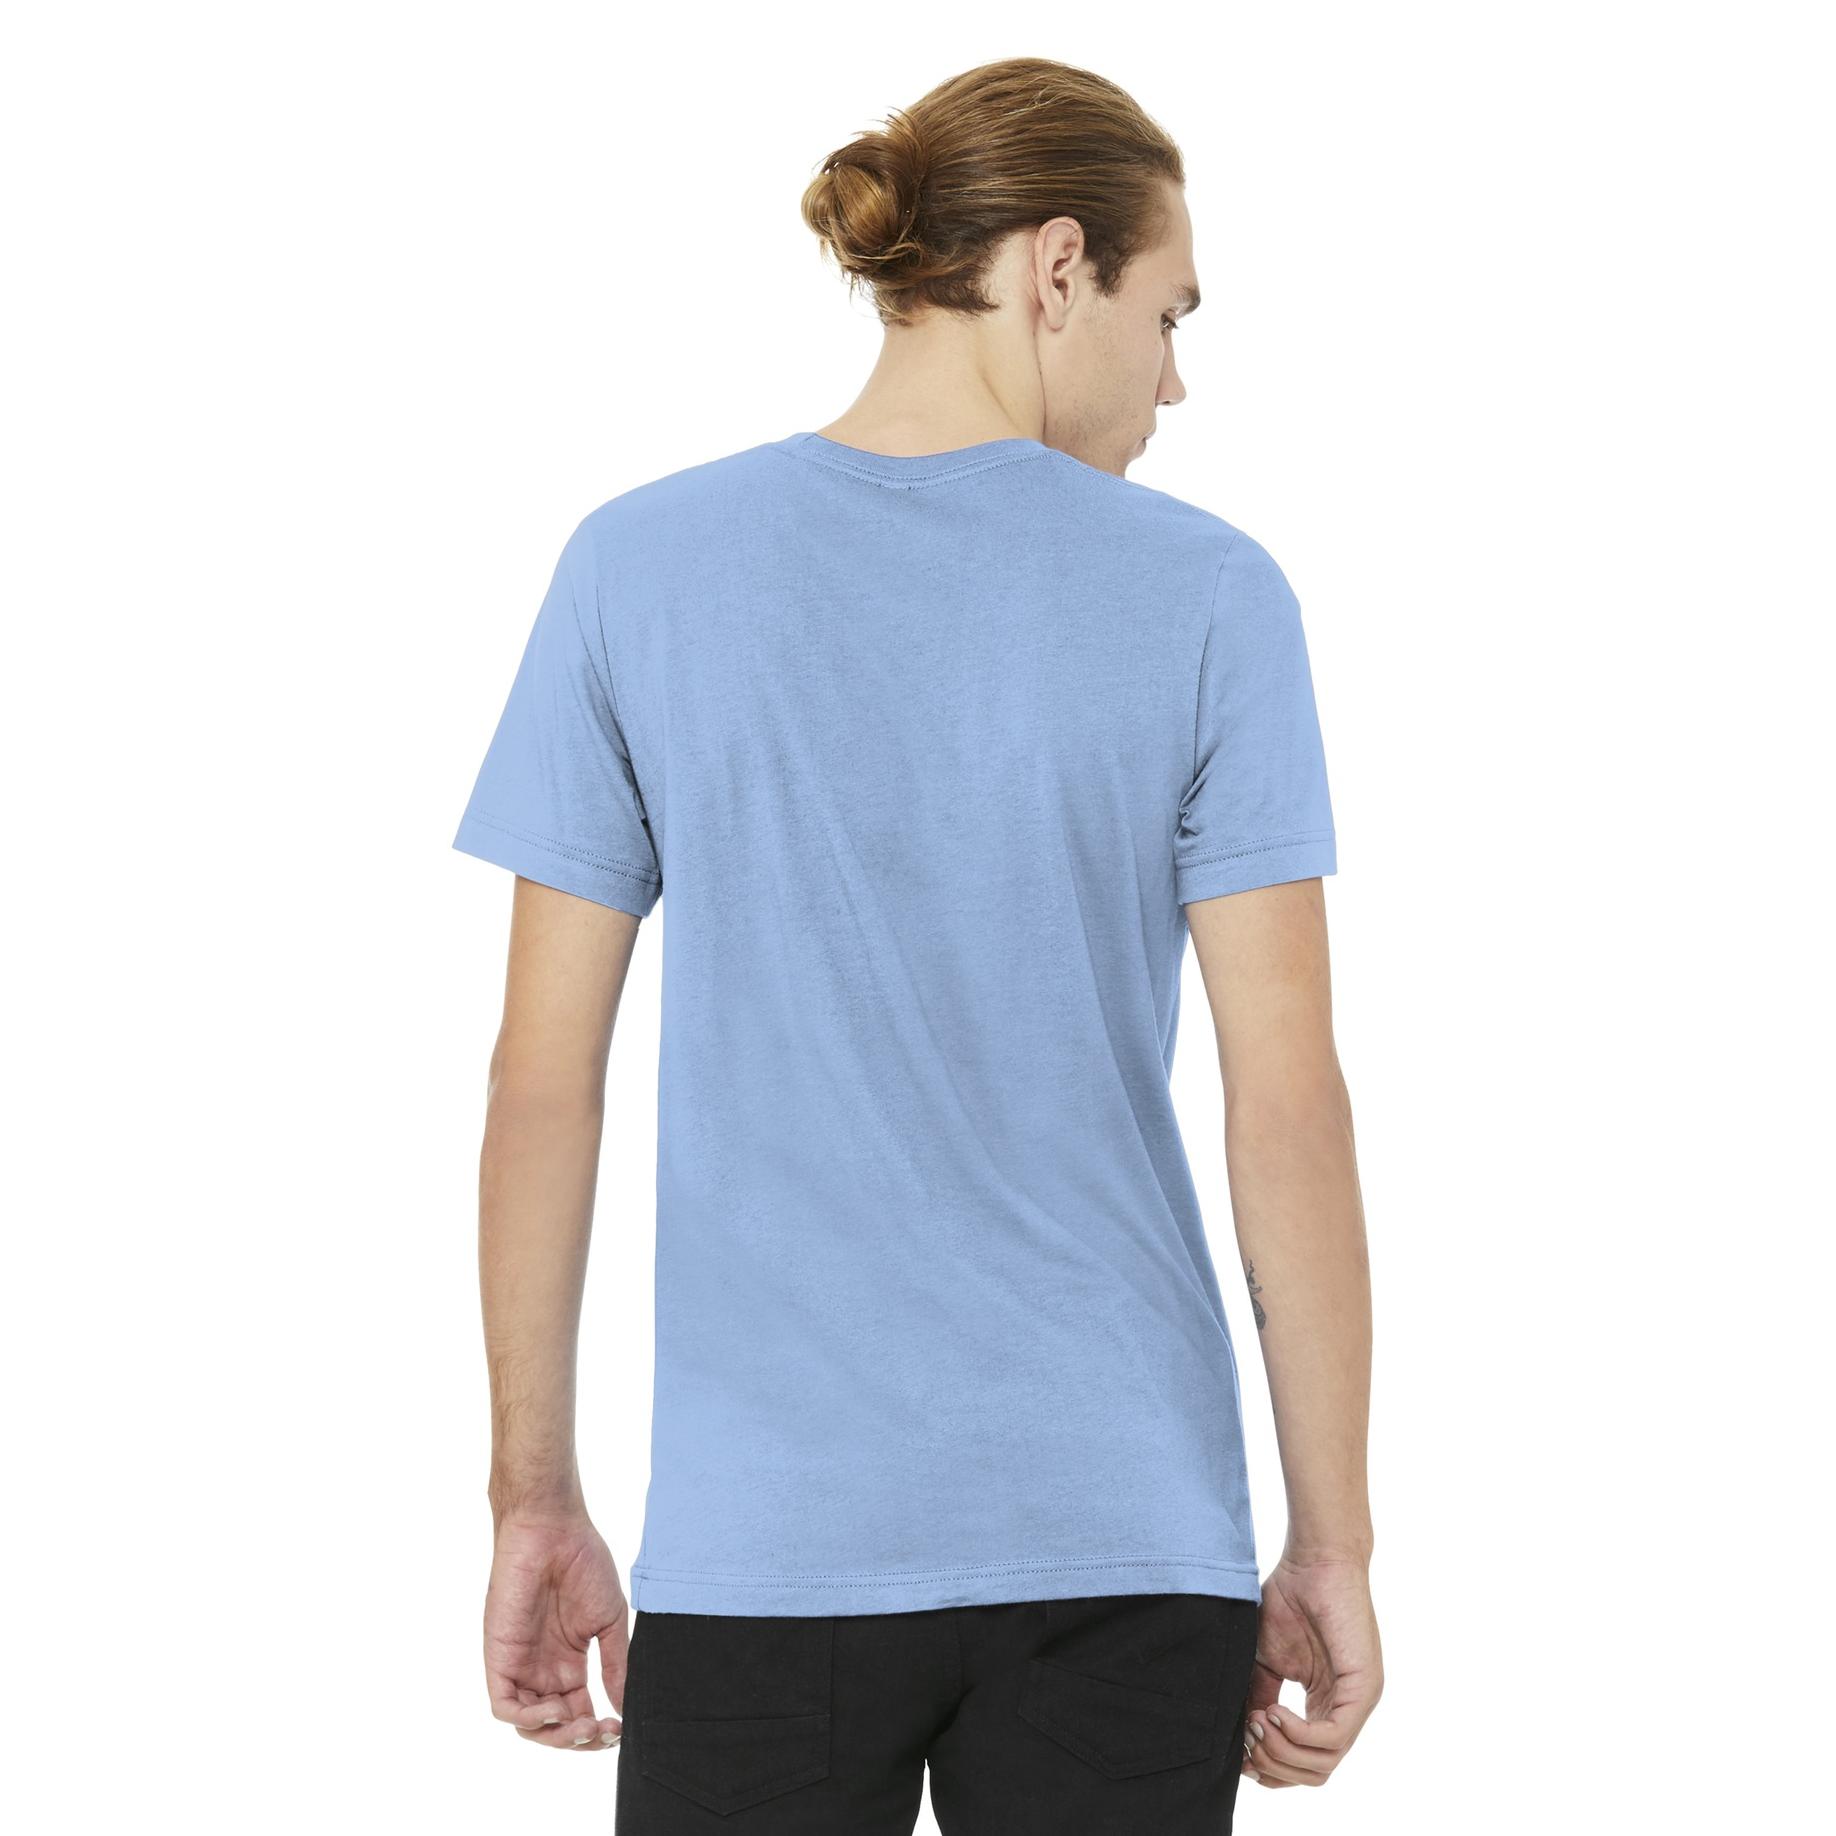 Bella Canvas Blank Shirts Wholesale 3001 Bella Canvas T-shirt Baby Blue Blank  Tshirts Baby Blue Bella Canvas Unisex T-shirt BC3001BLANK 